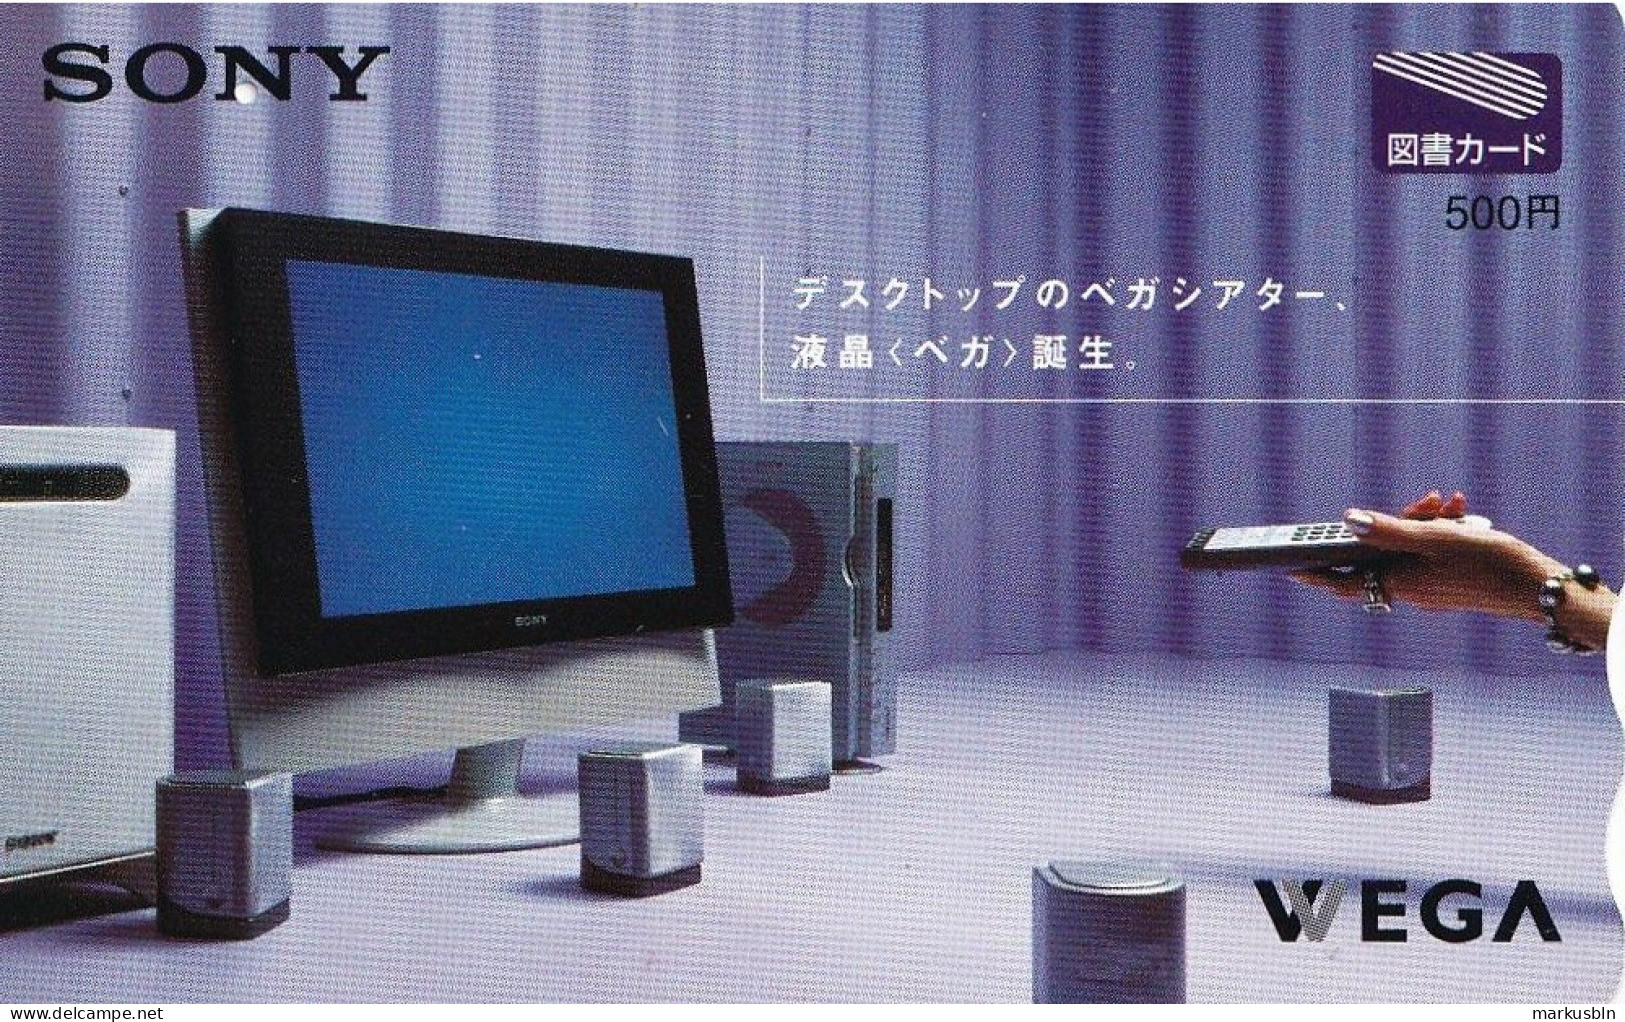 Japan Prepaid Libary Card 500 - Sony Television - Japan